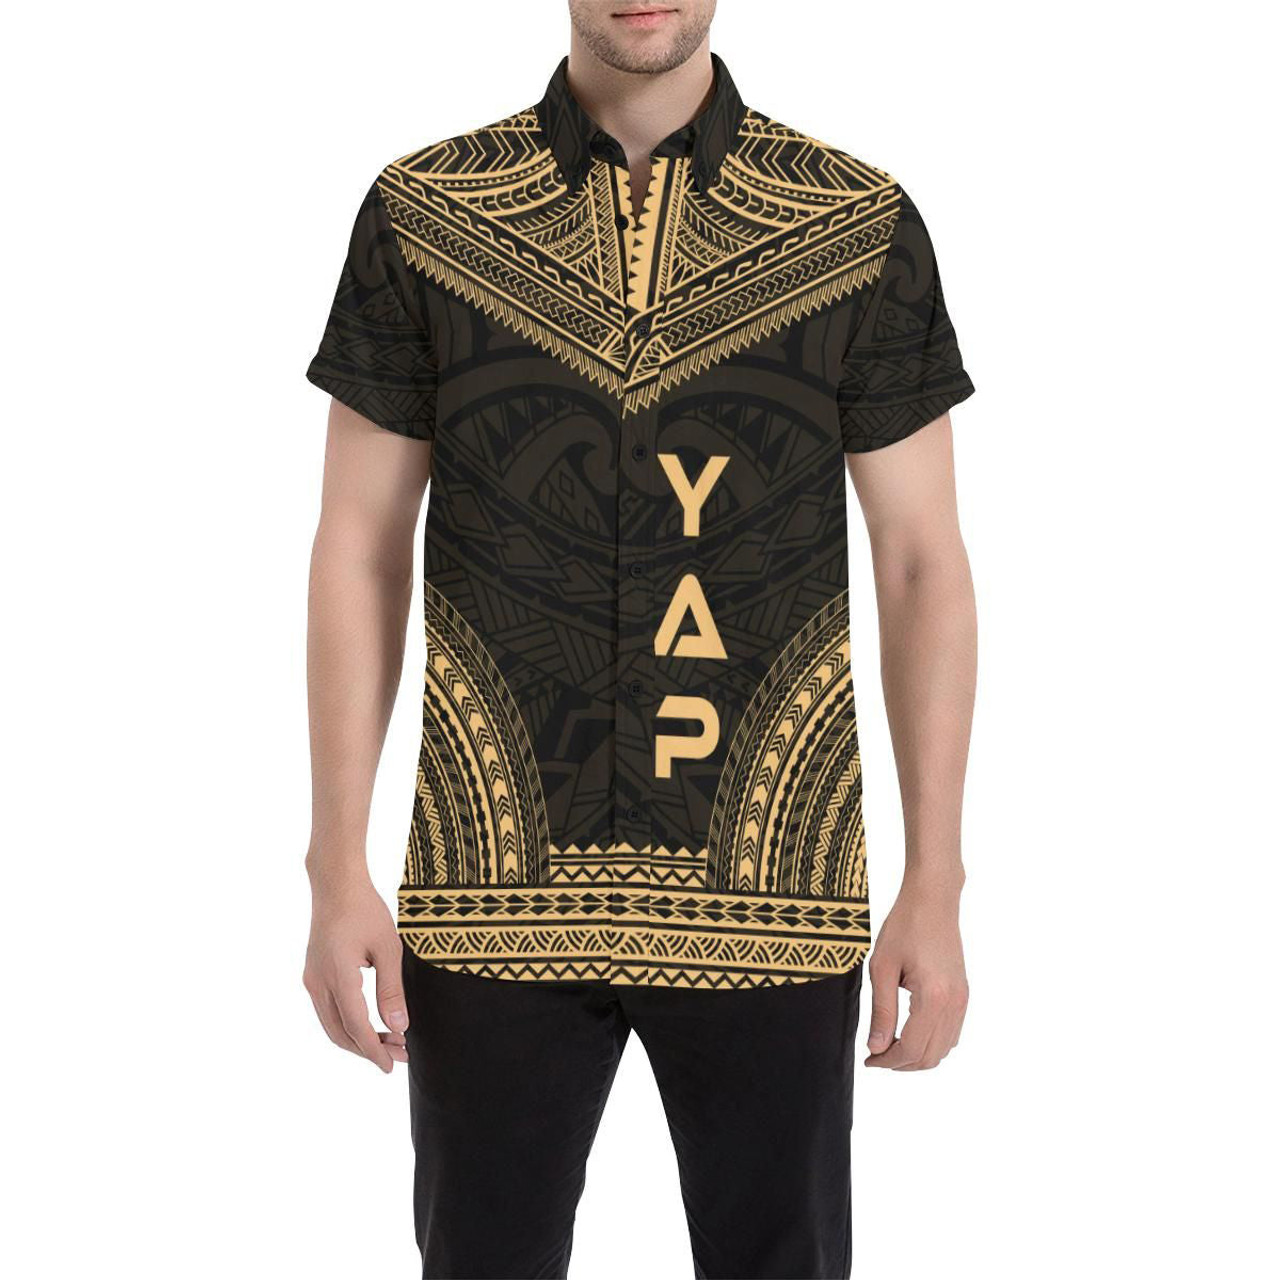 Yap Polynesian Chief Hawaiian Shirts - Gold Version 1